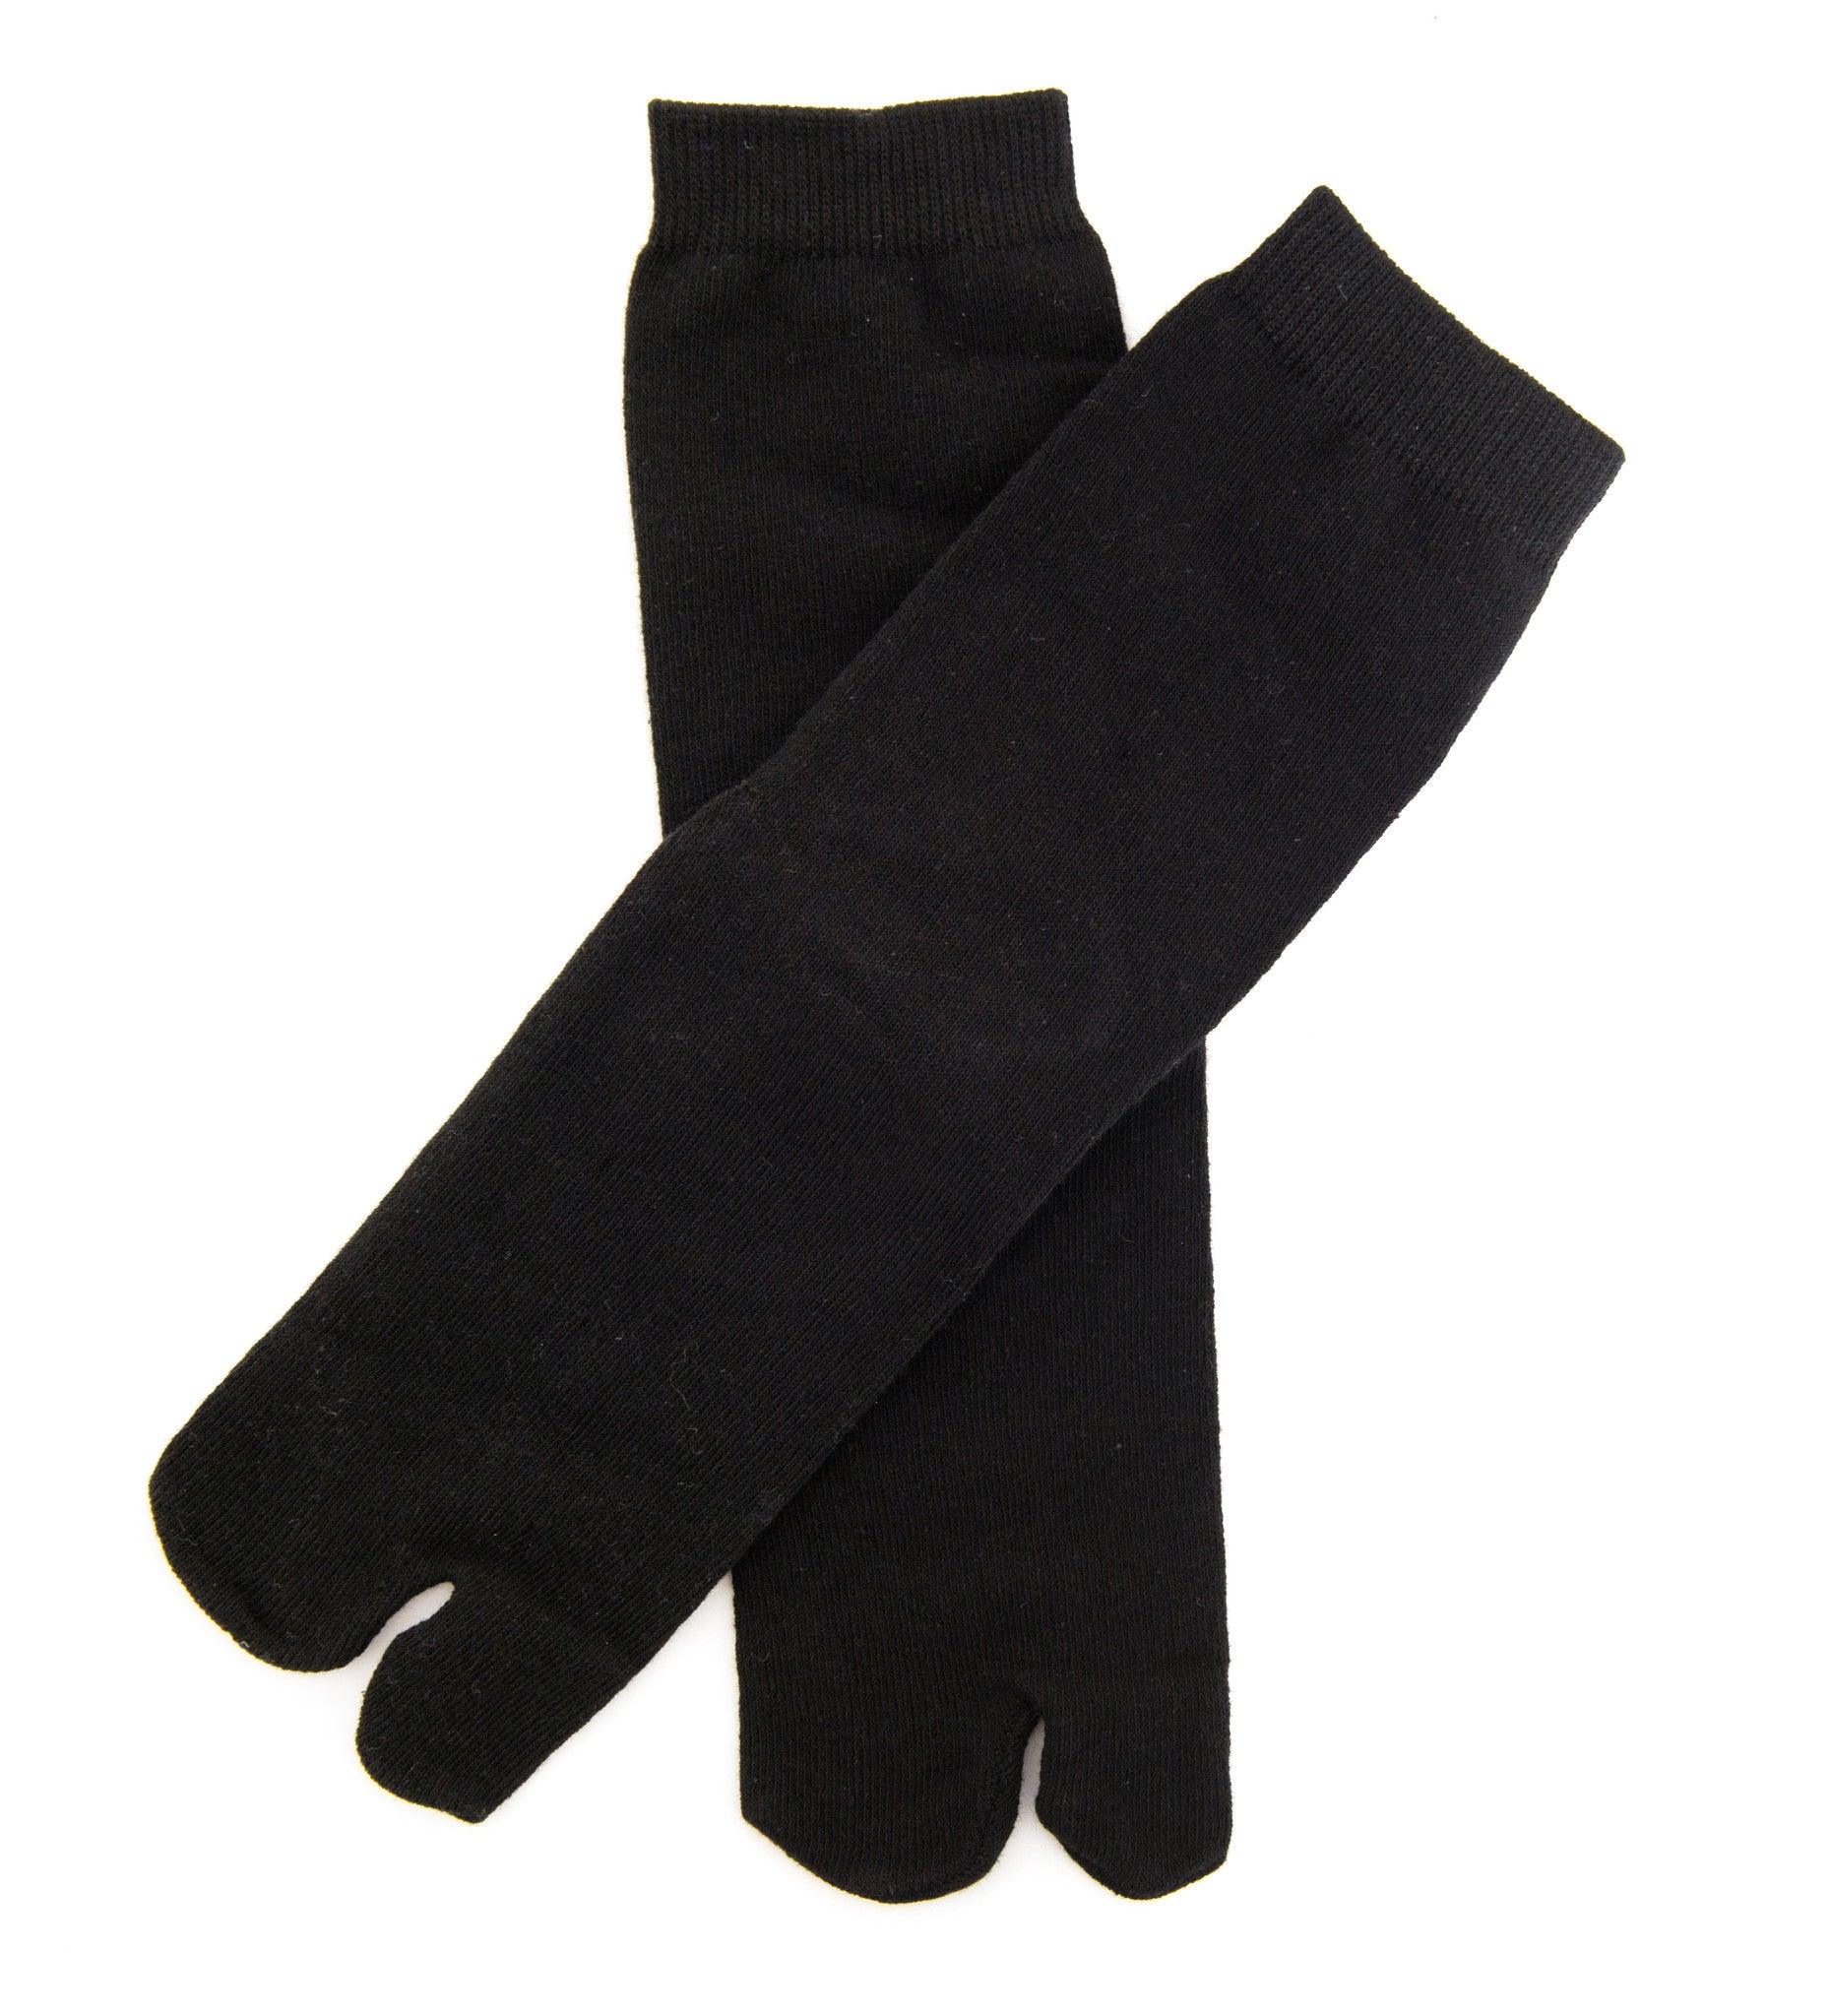 1 Pair - V-Toe Flip Flop Tabi Socks - Black Solid by V-Toe Socks, Inc - The Hammer Sports